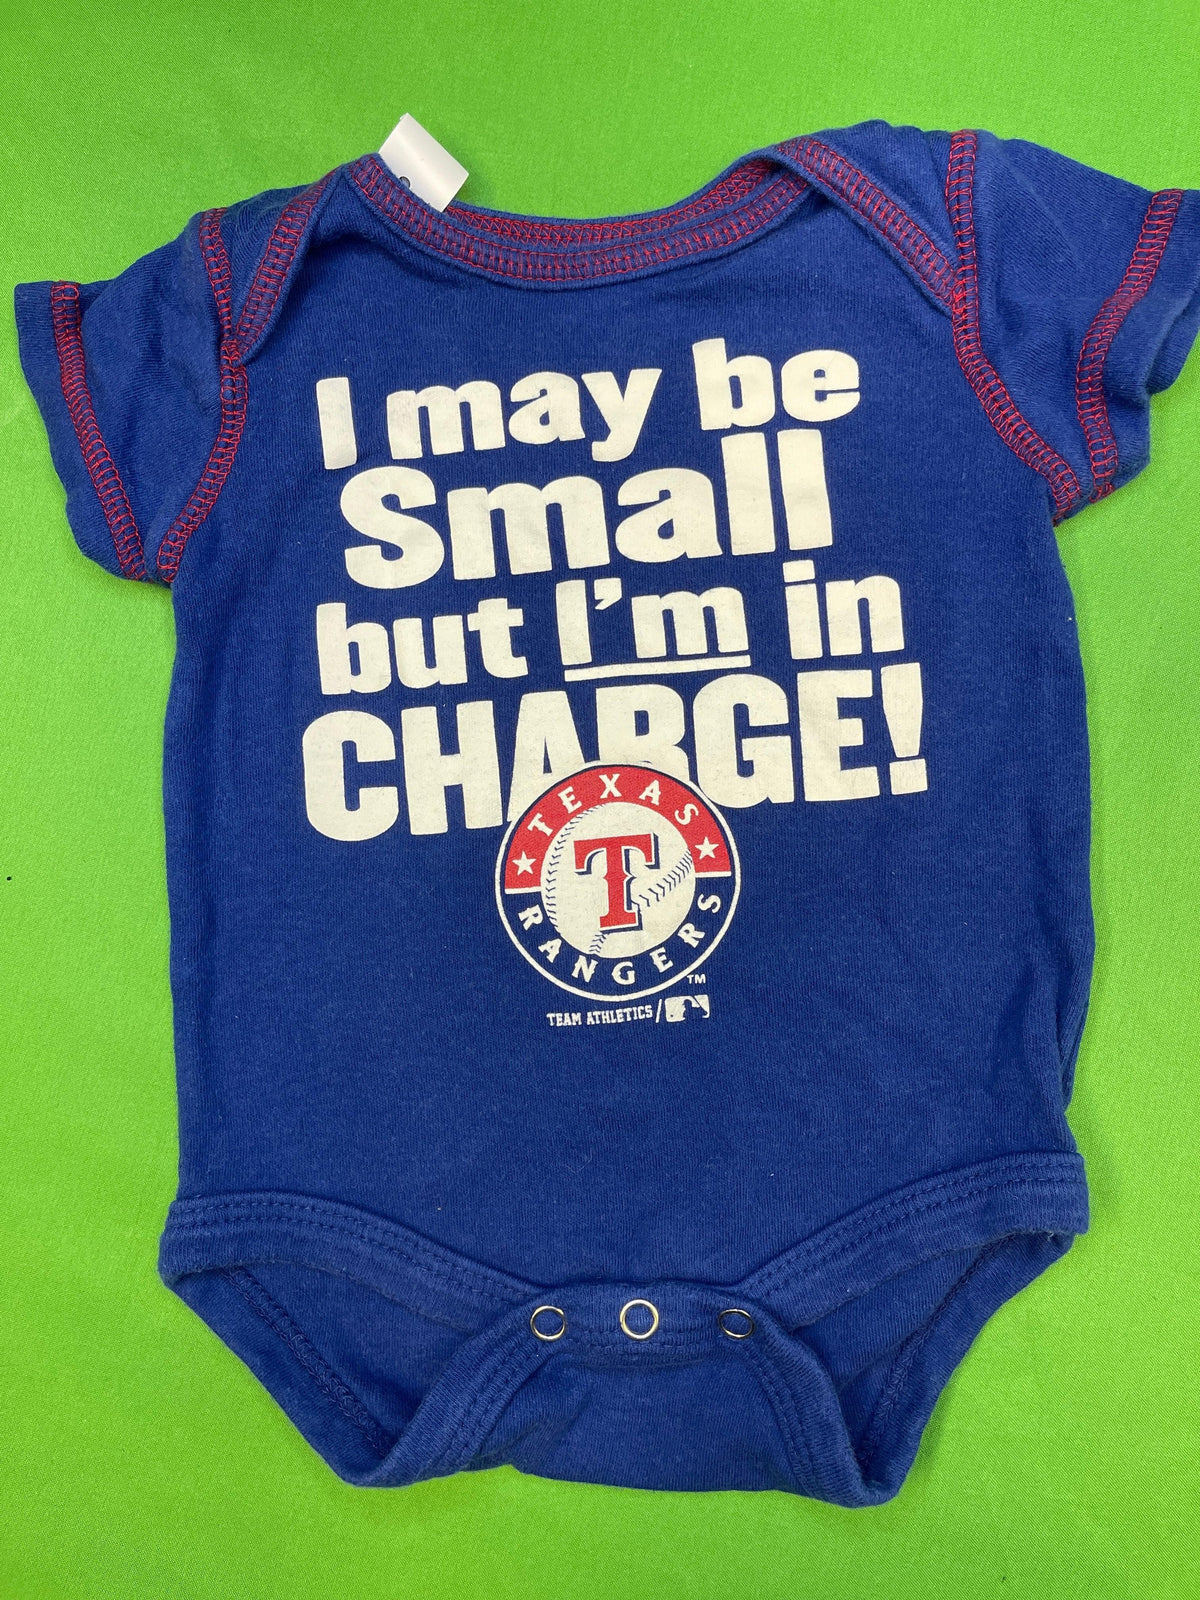 MLB Texas Rangers Team Athletics Baby Infant Bodysuit/Vest Newborn 0-3 months